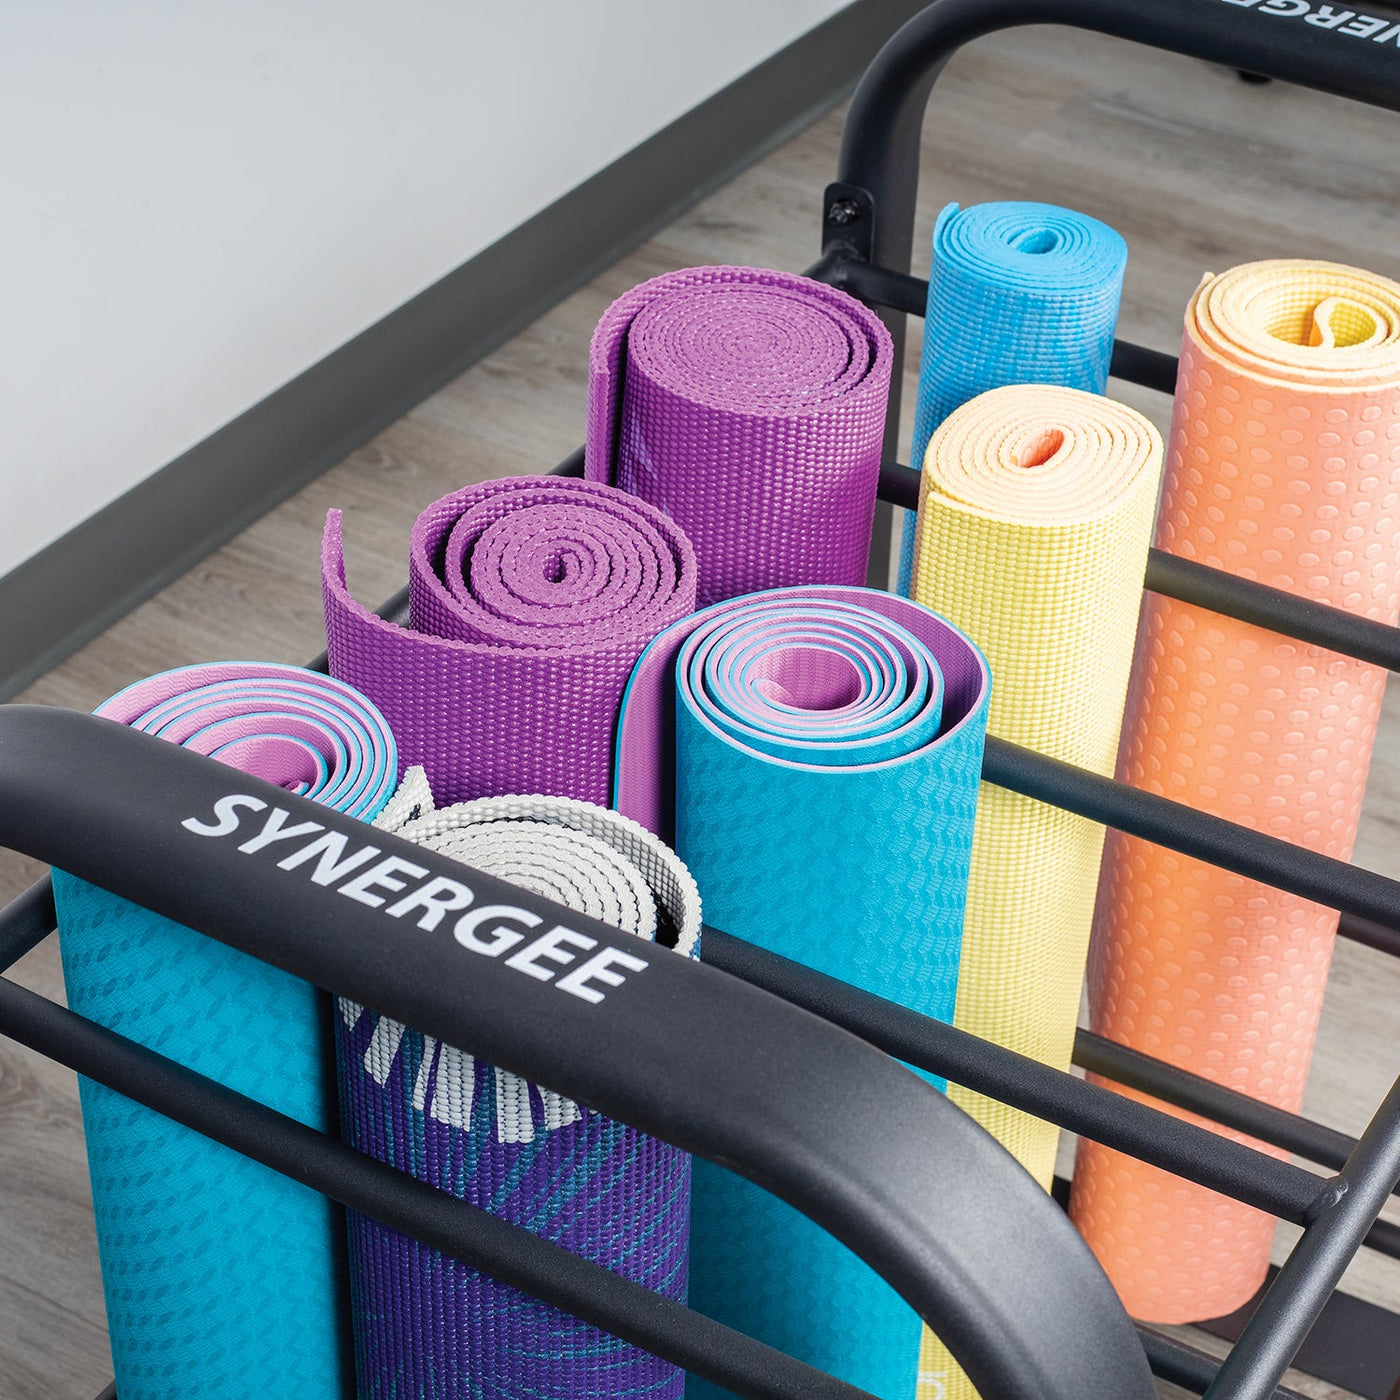 Synergee Yoga Mat Storage Roller Rack